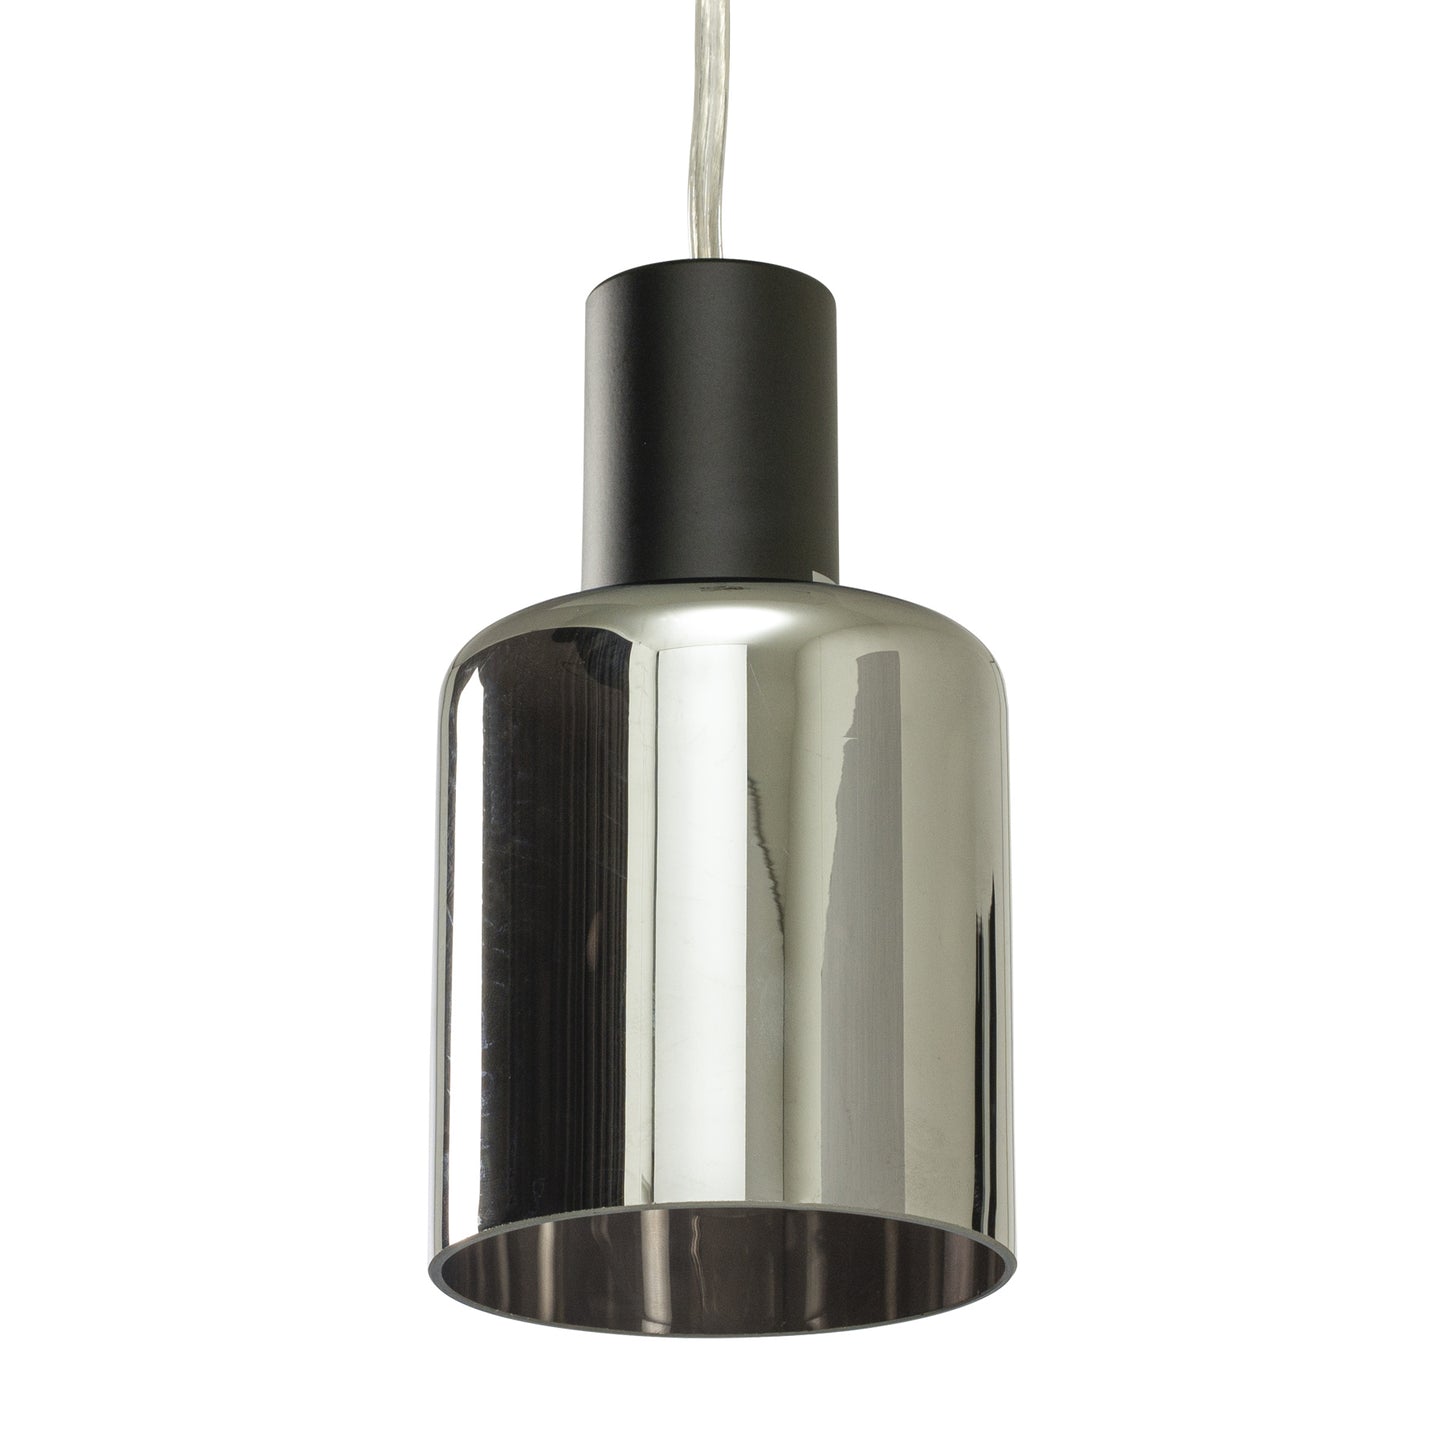 Cylinder vinduspendel laget i svart metall og sotet glass med lang ledning, bryter og hullbrikke - Aneta belysning